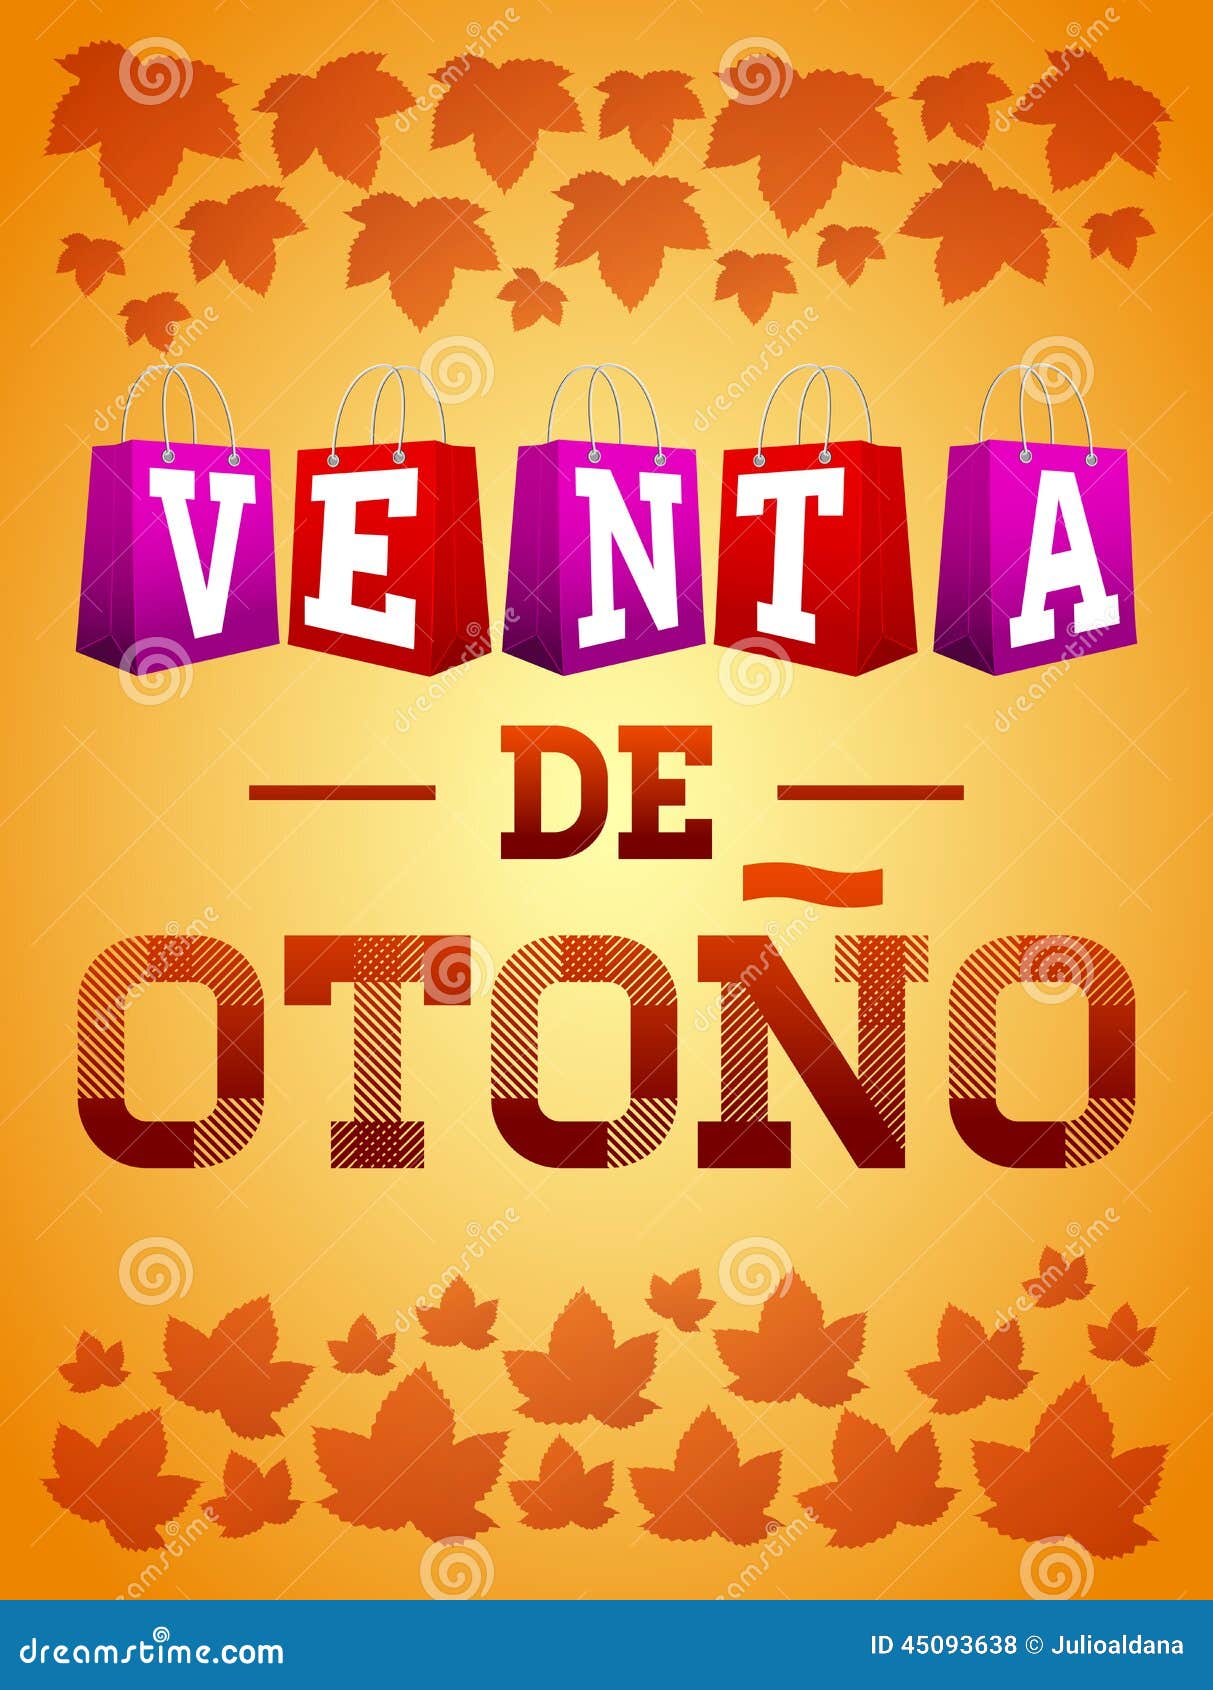 venta de otono - autumn sale spanish text  typography poster